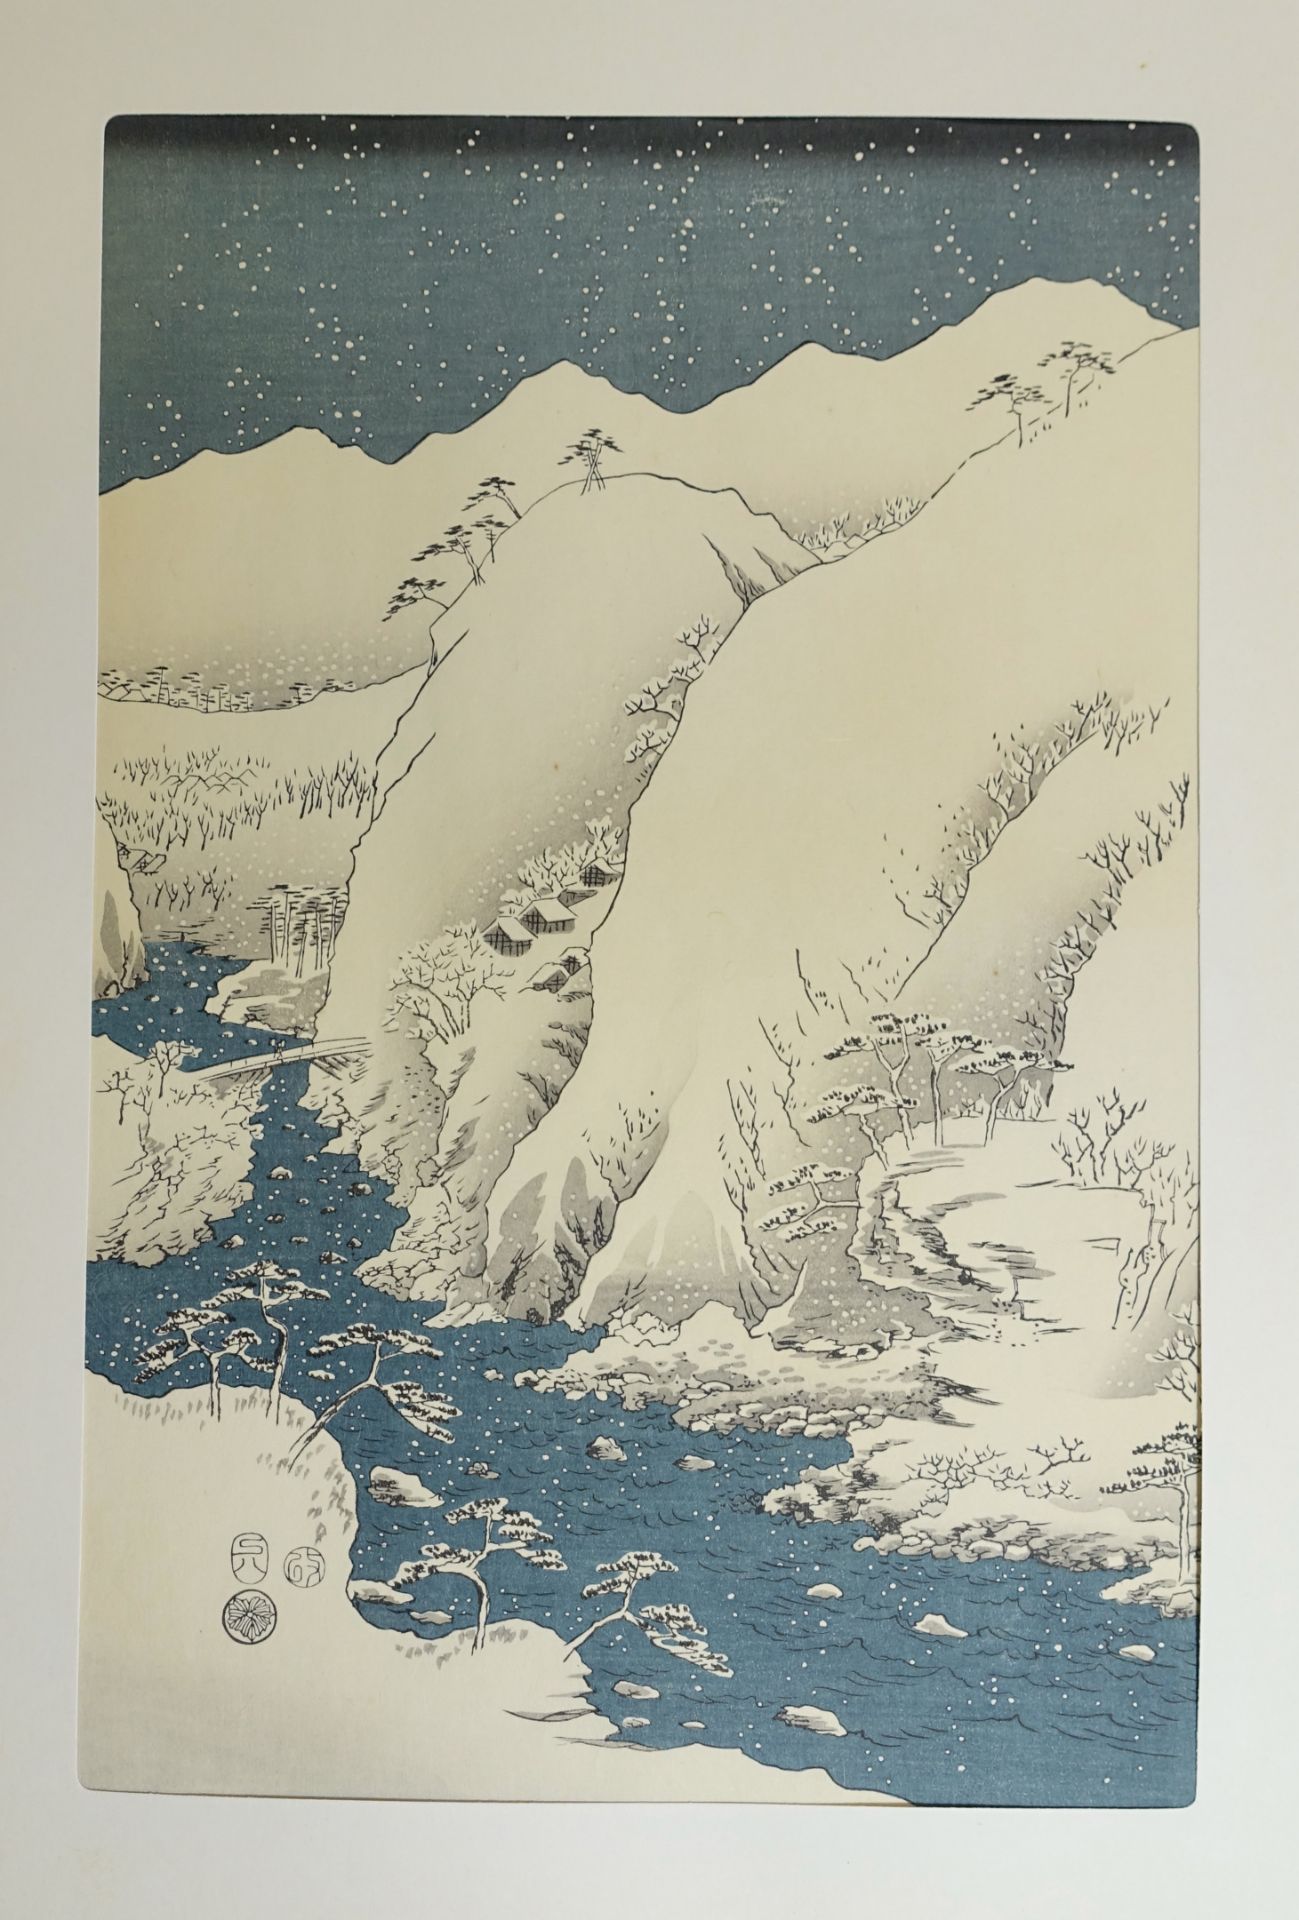 JAPANESE PRINTS -- UTAGAWA HIROSHIGE (1797-1858). "Mountains and Rivers on the Kiso Road